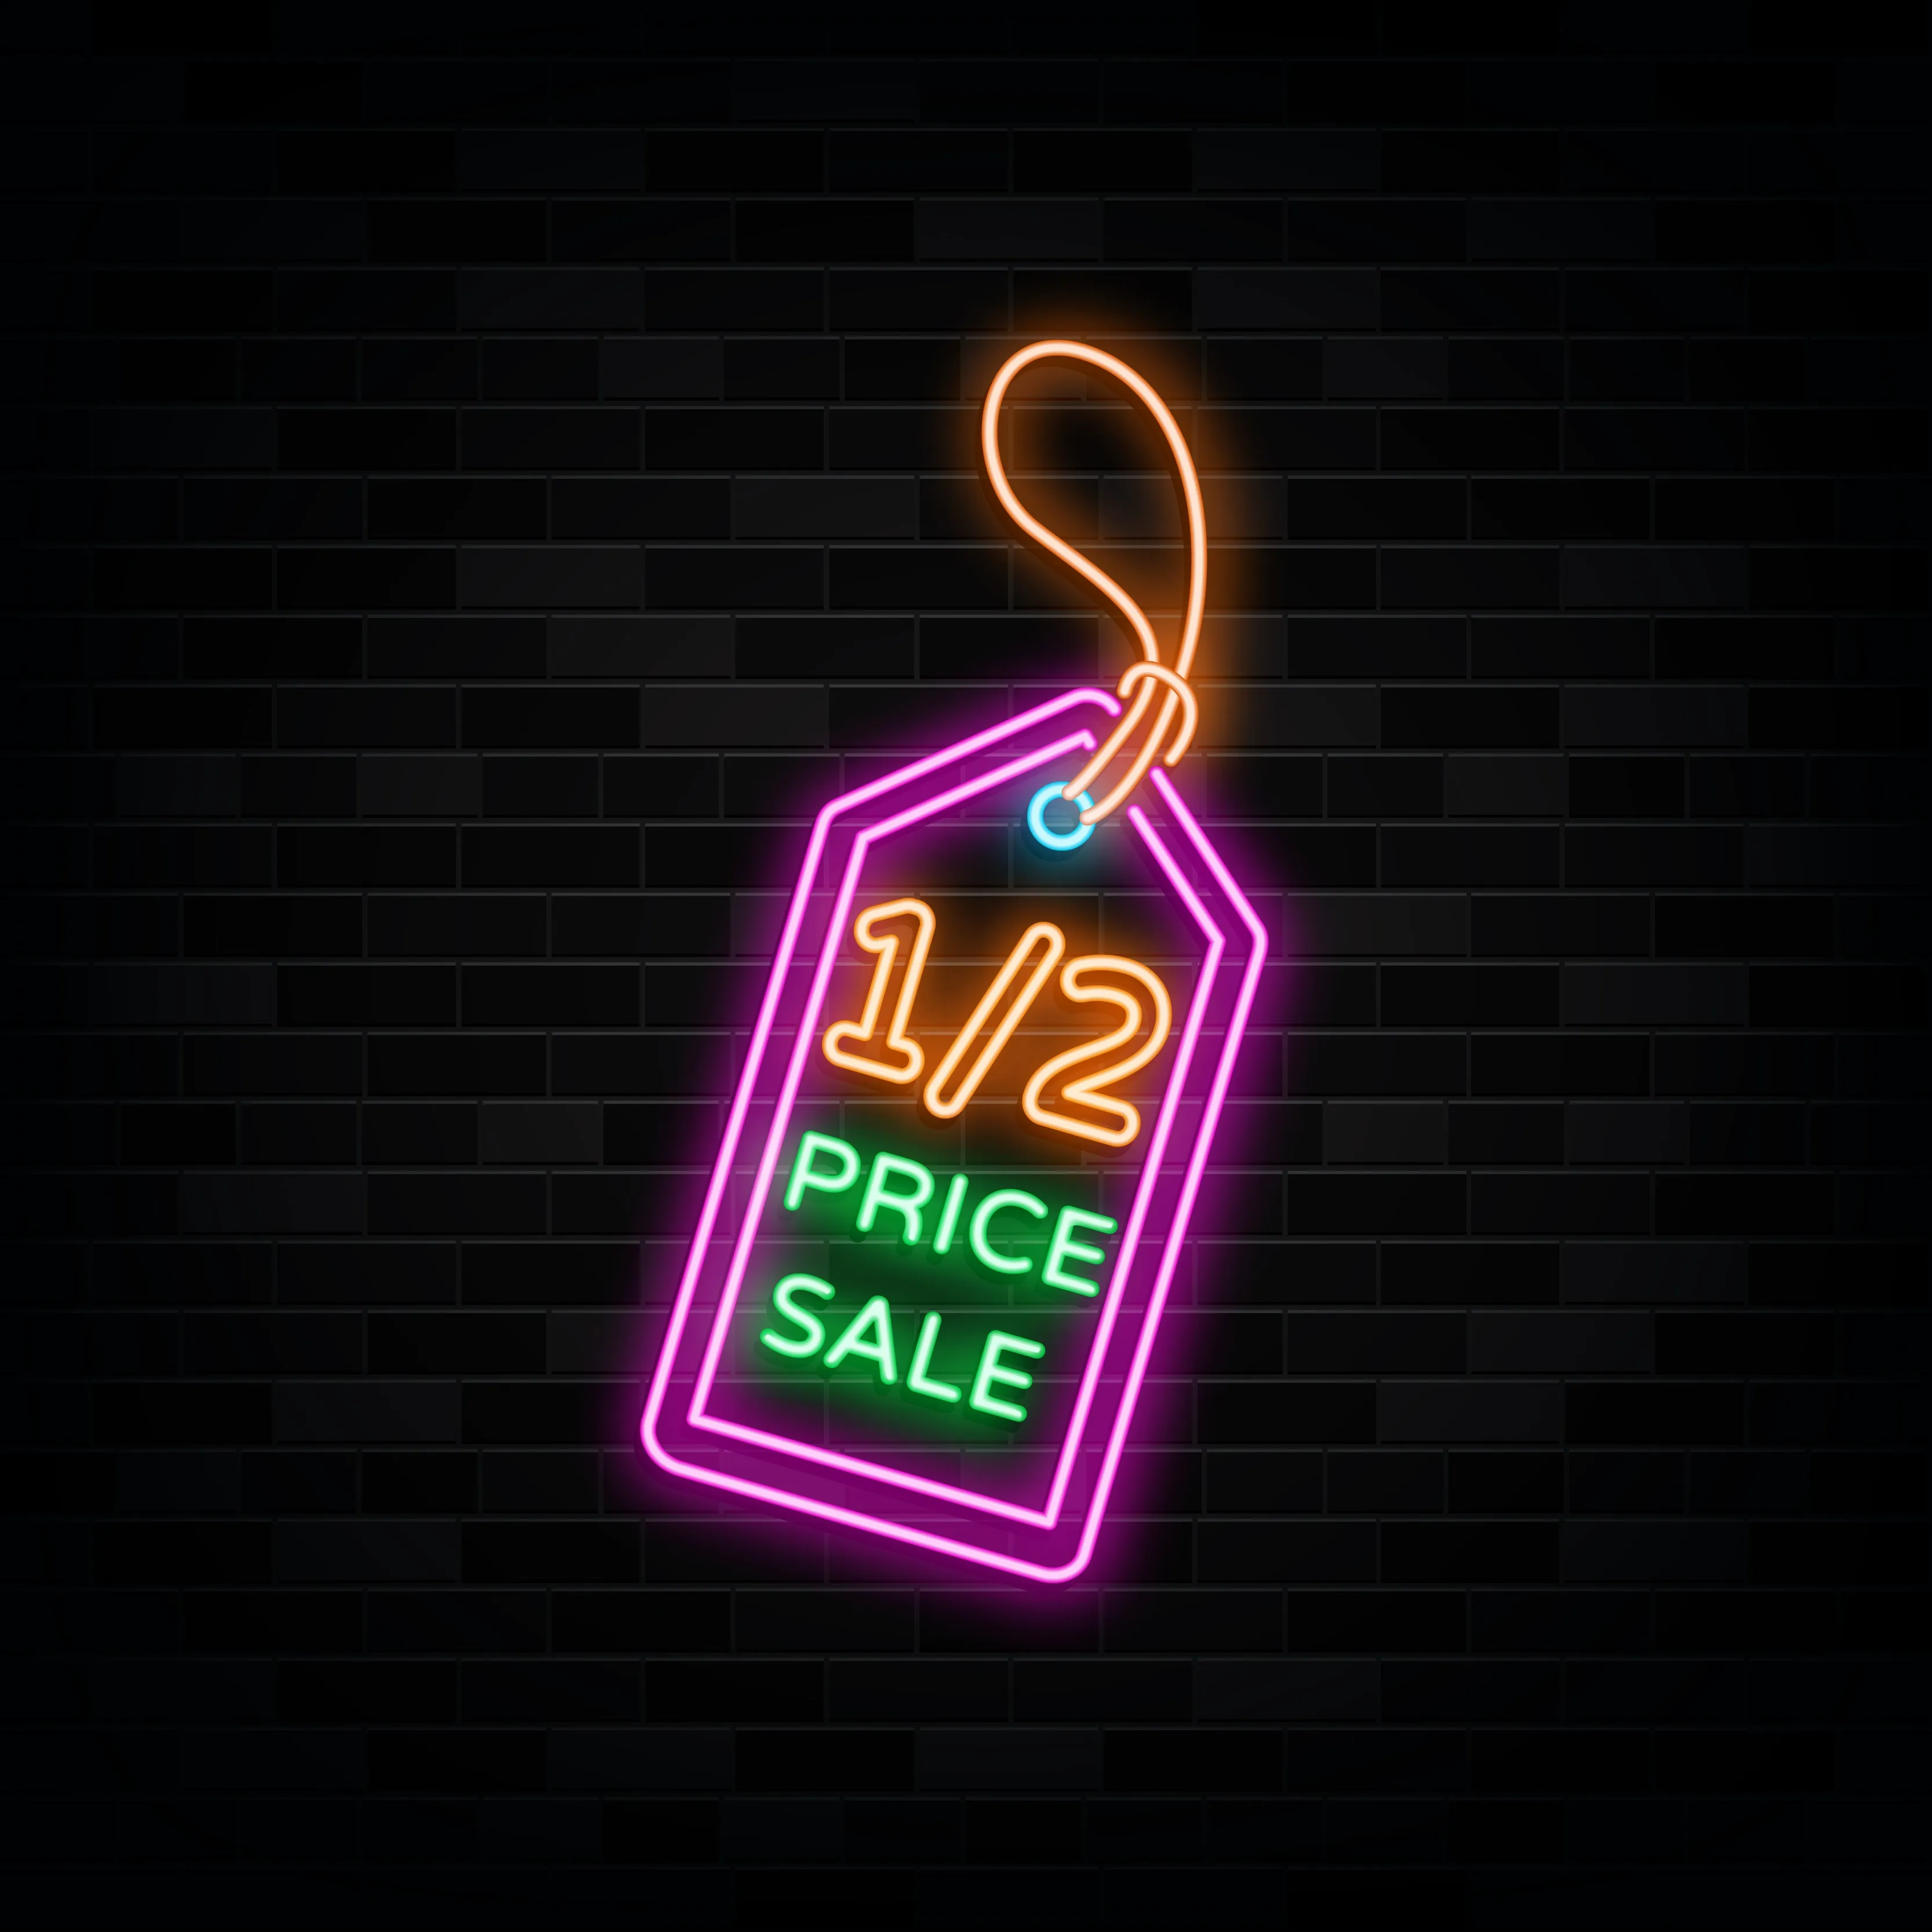 Price sale neon signs design template neon style